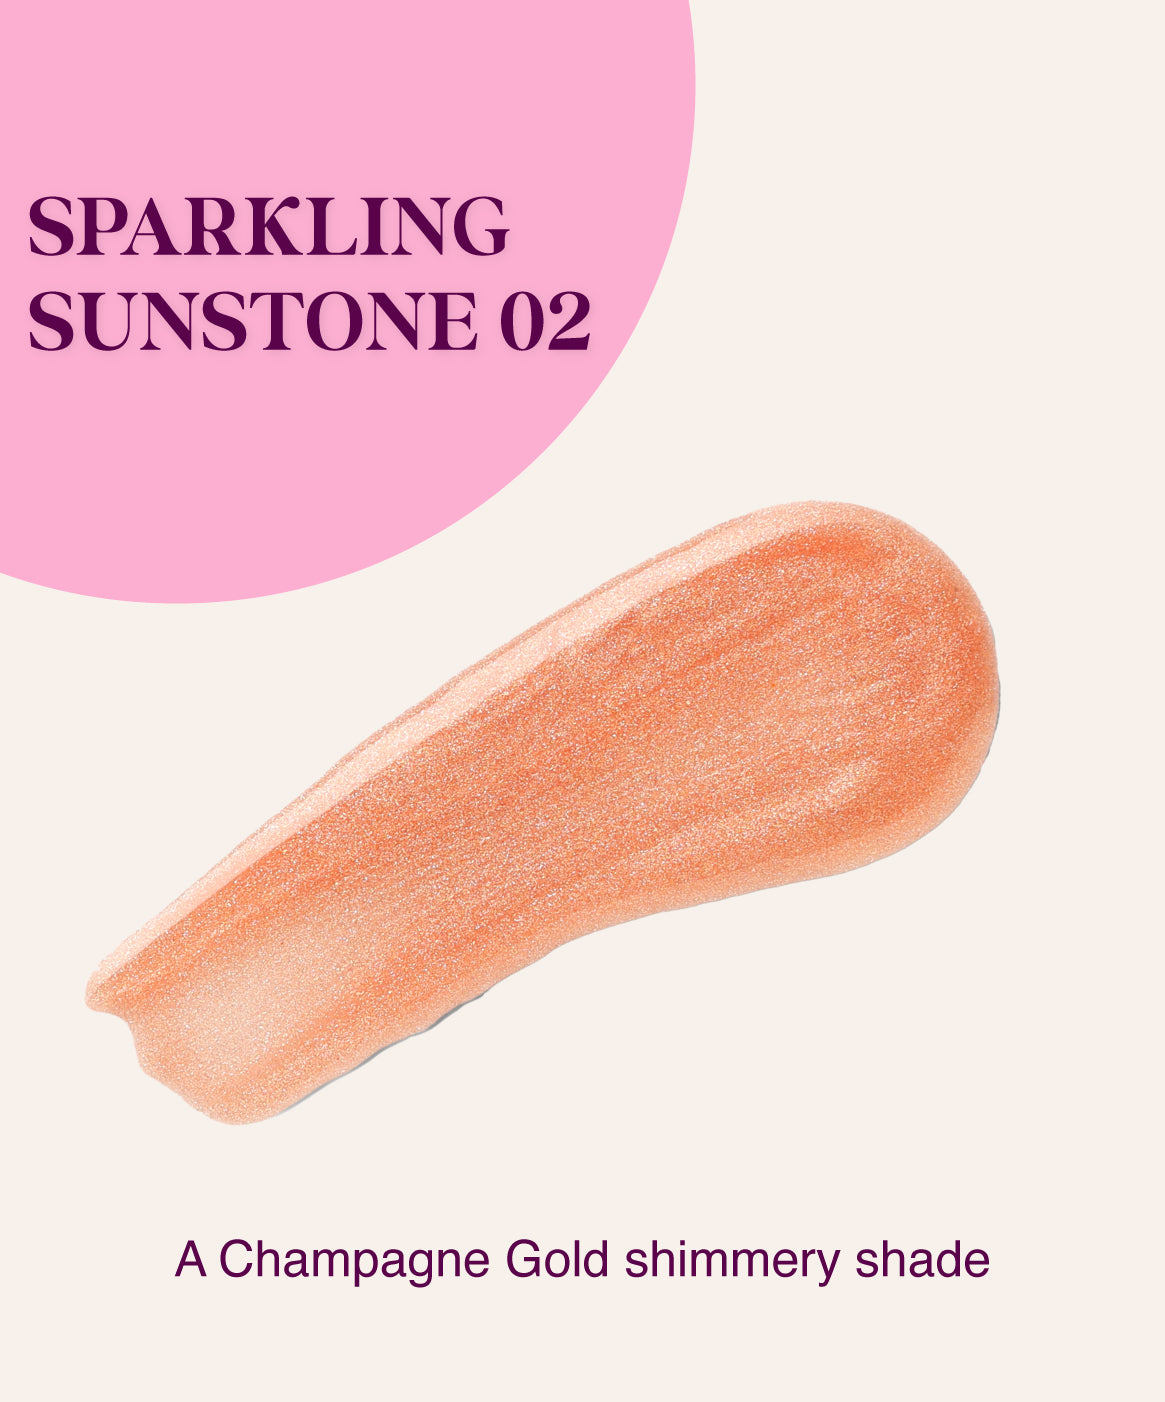 Sparkling Sunstone 02